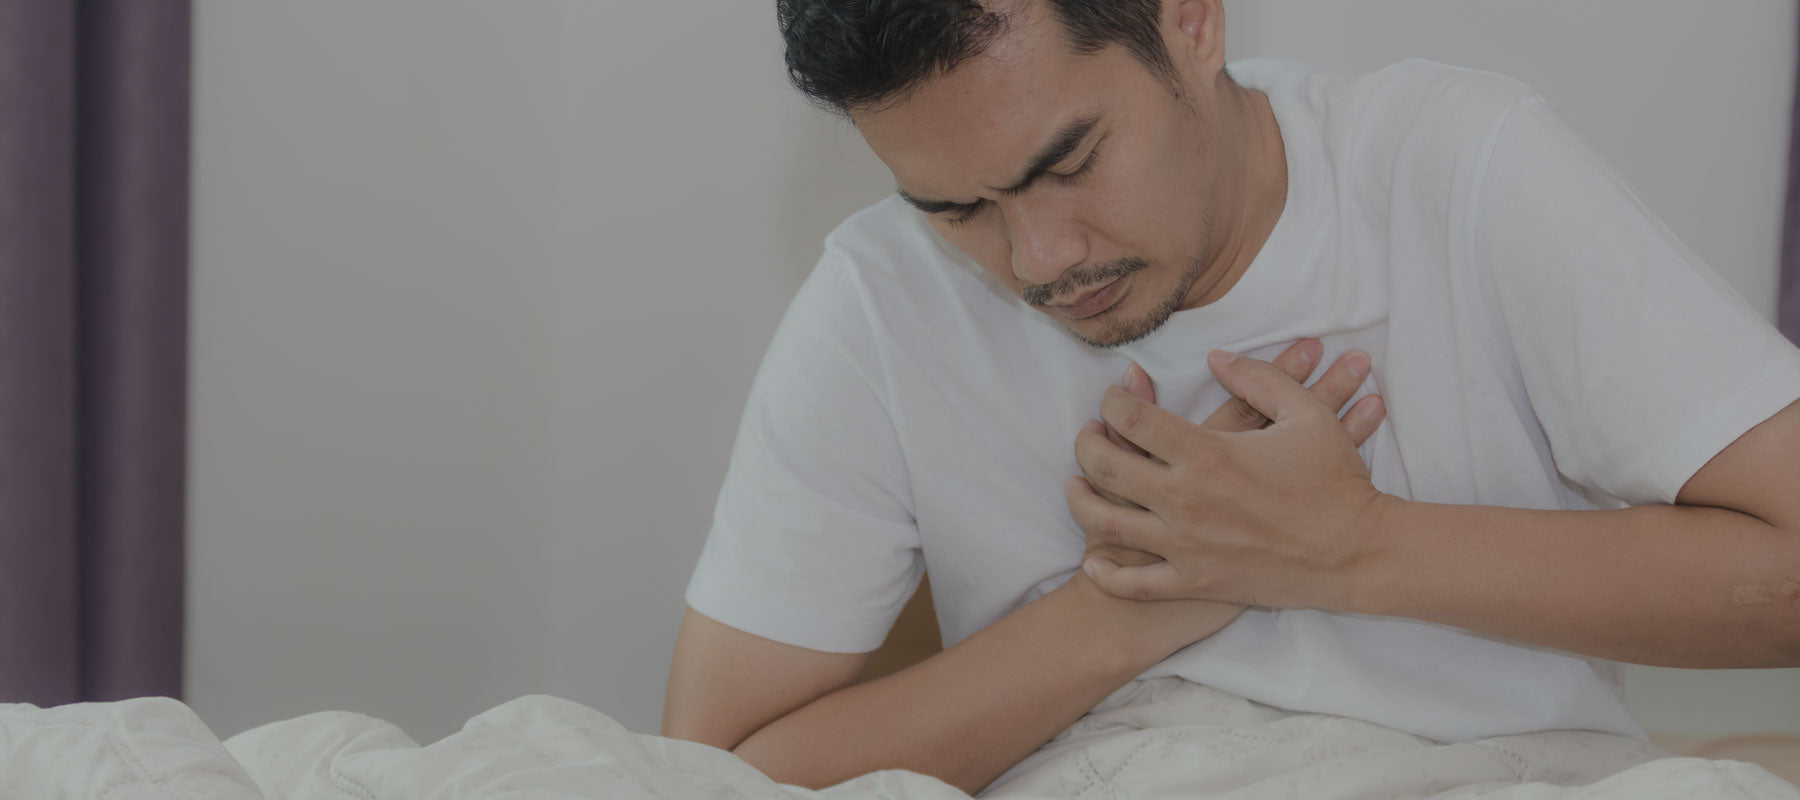 How to Sleep With Acid Reflux and Heartburn